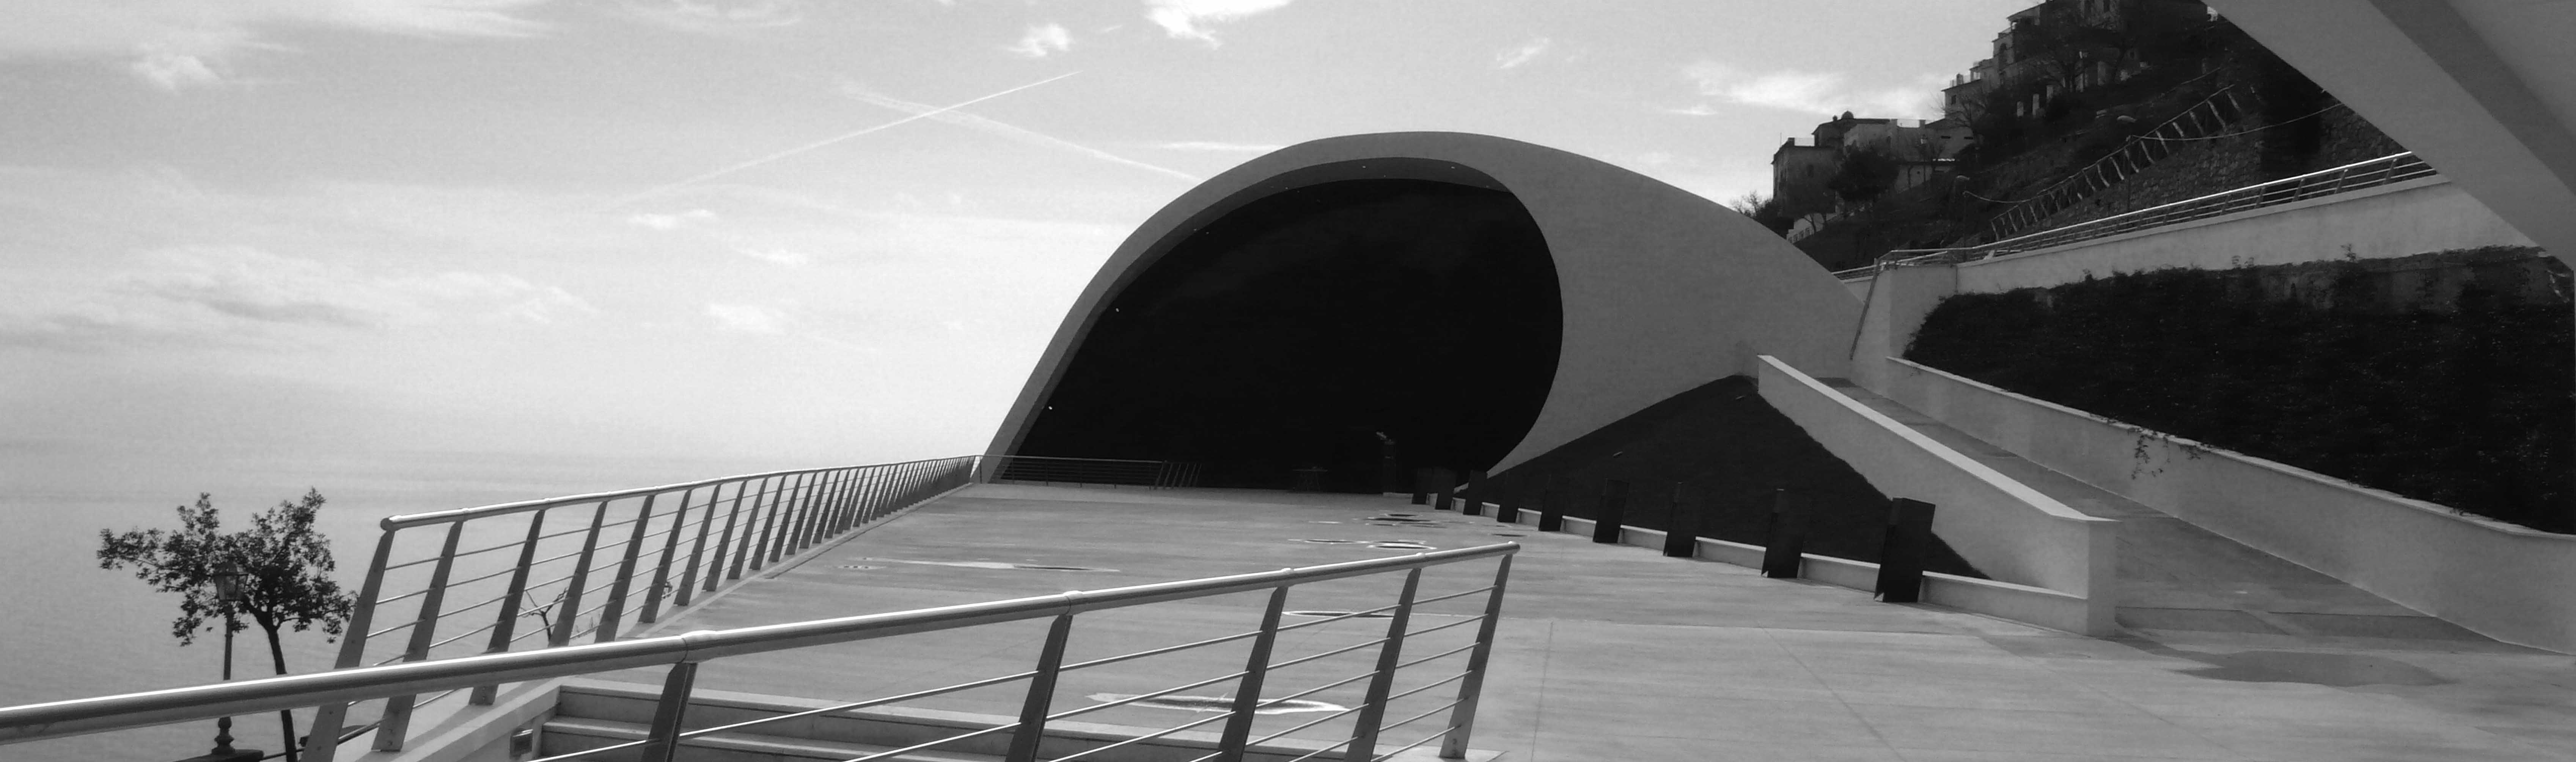 Auditorium Oscar Niemeyer, Ravello, italy, Gnosis progetti <br />Image copyright: @Gnosis progetti